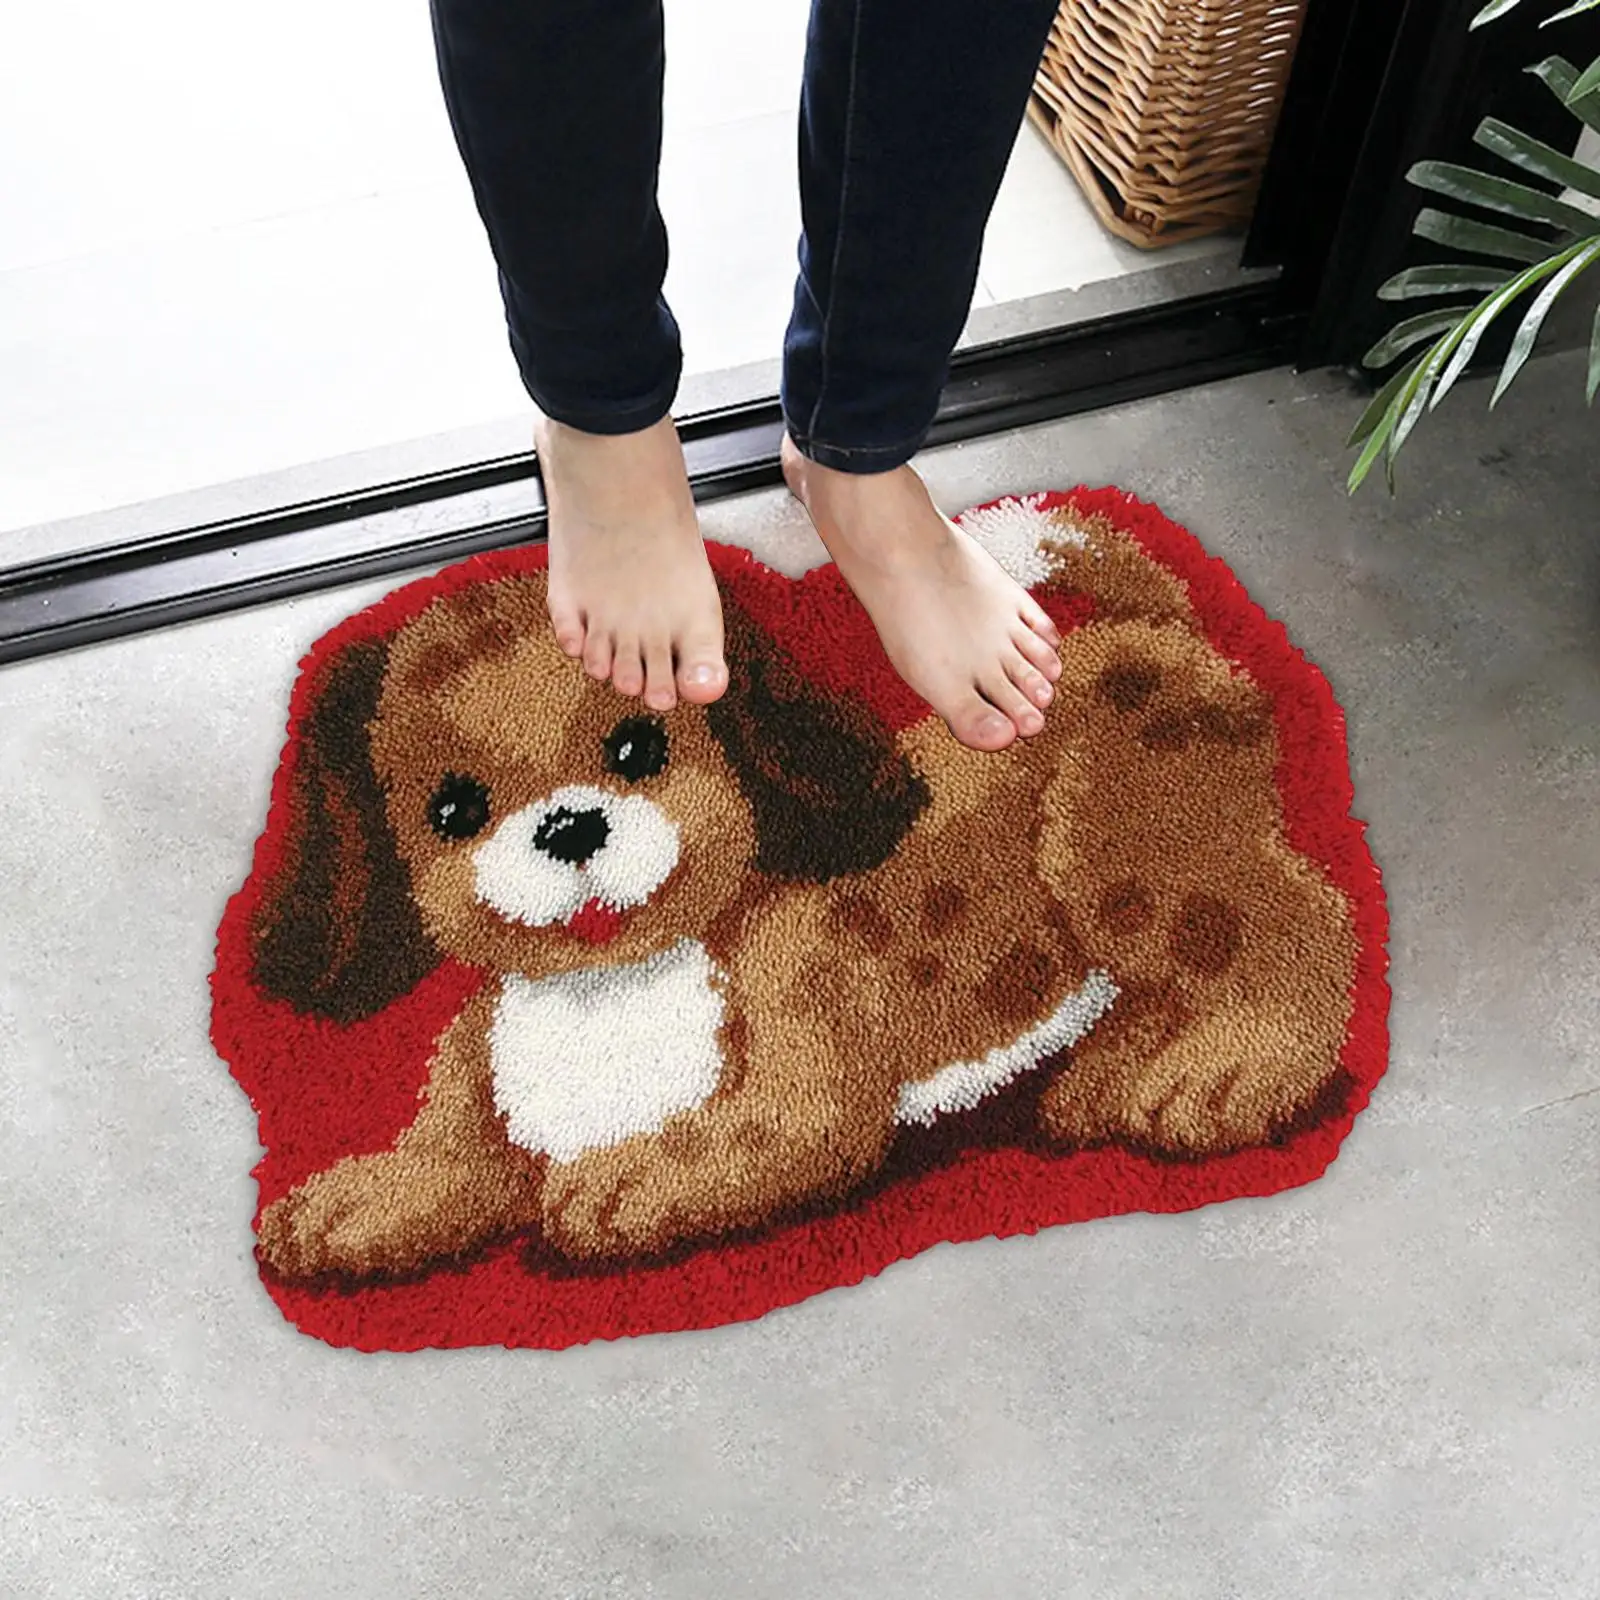 Creative Carpet Making Kit Cute Puppy Festival Gift Handmade for Christmas